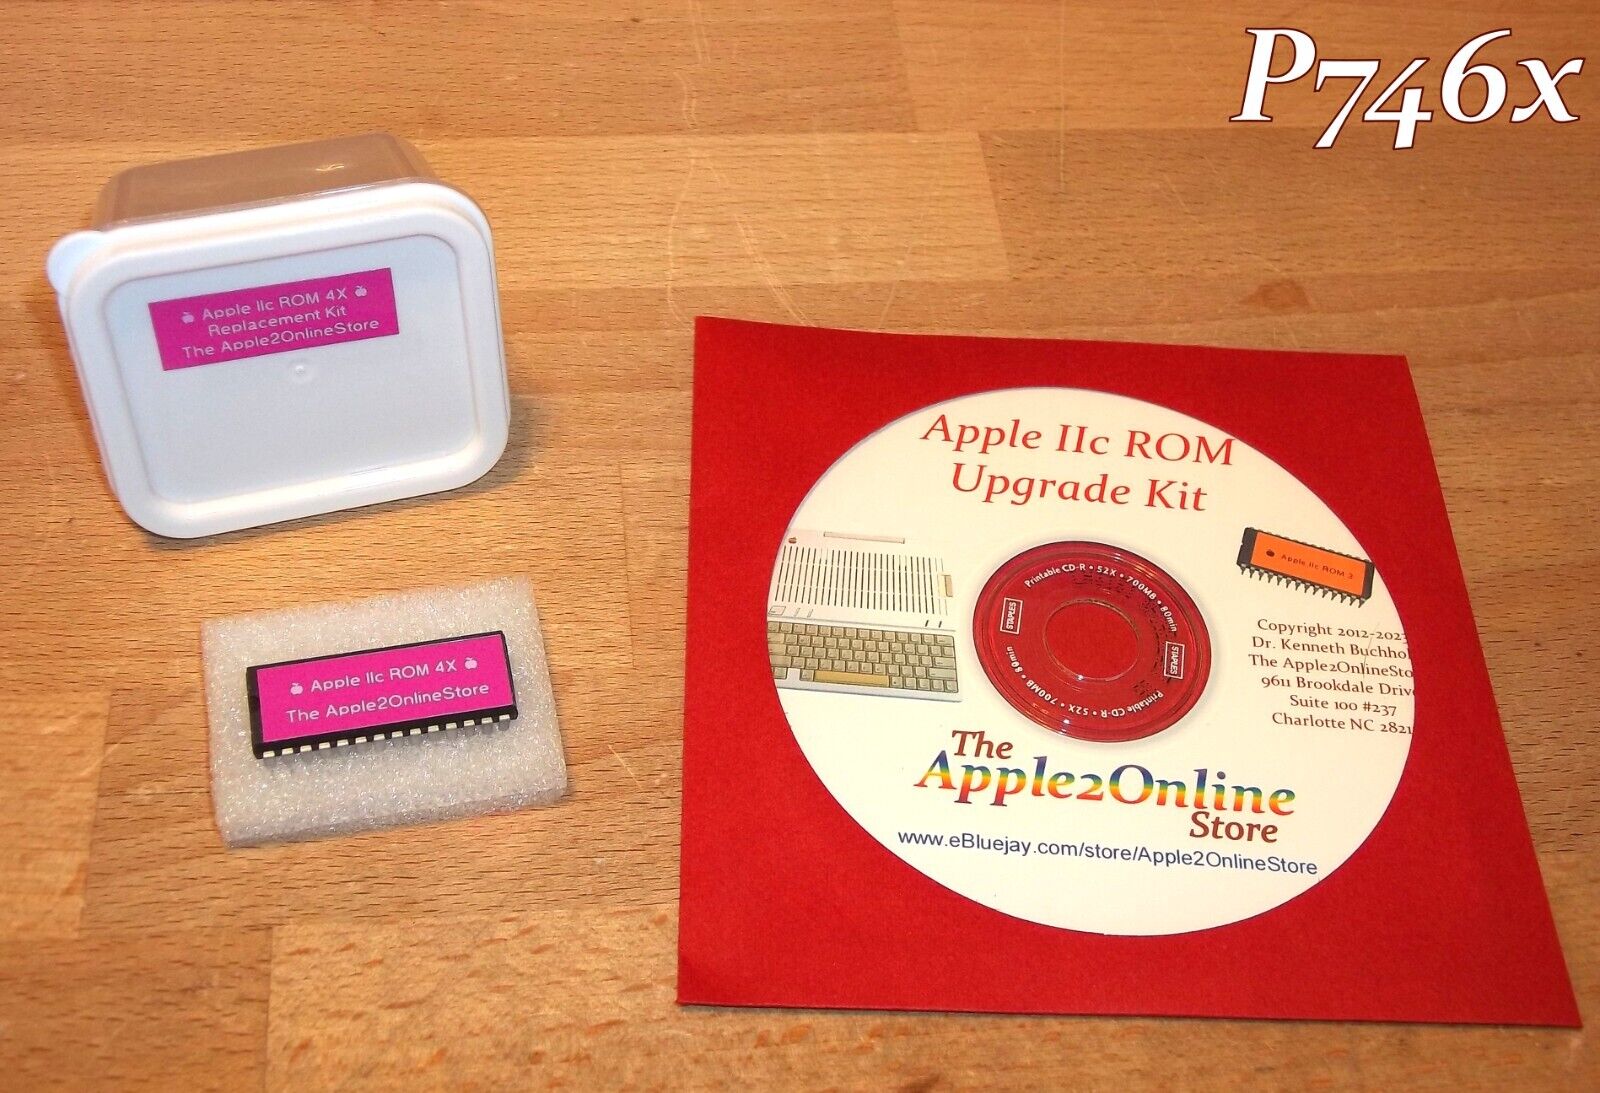 ✅ 🍎 Brand New Apple IIc ROM 4X Upgrade Kit